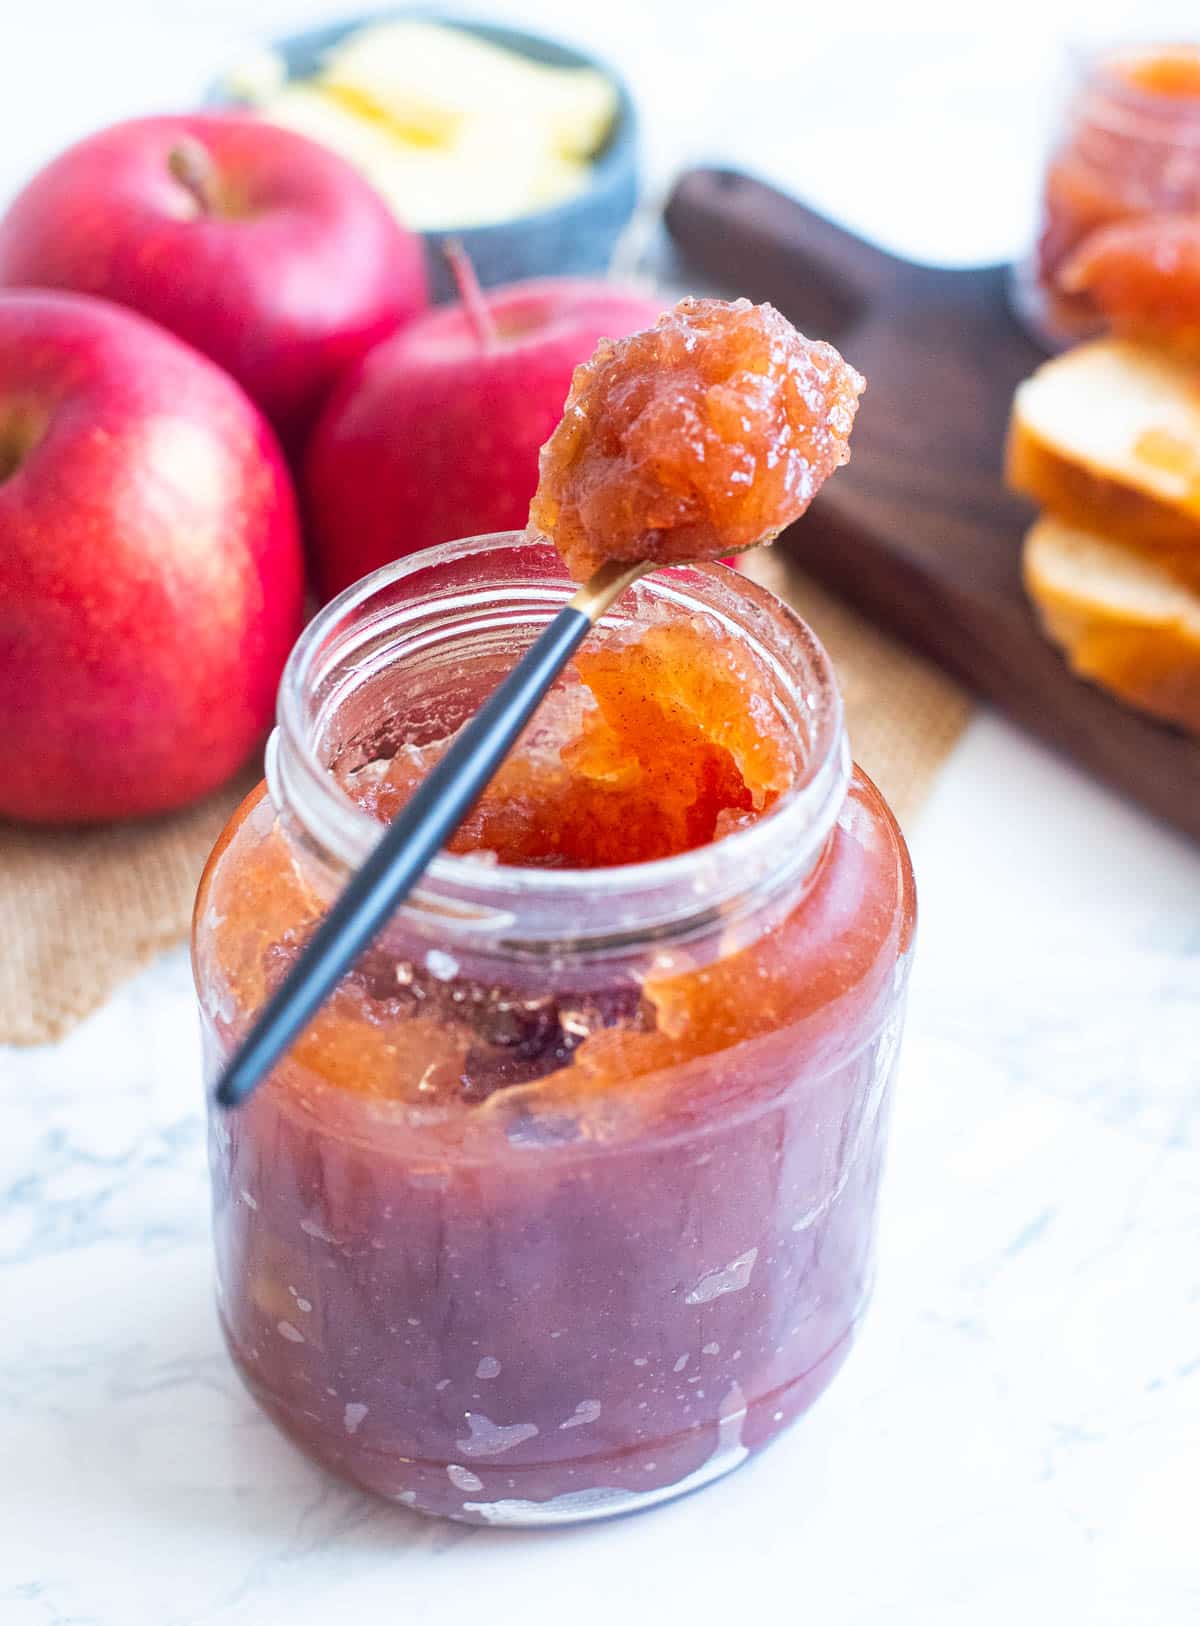 Apple jam in a glass jar, with a small teaspoon of jam